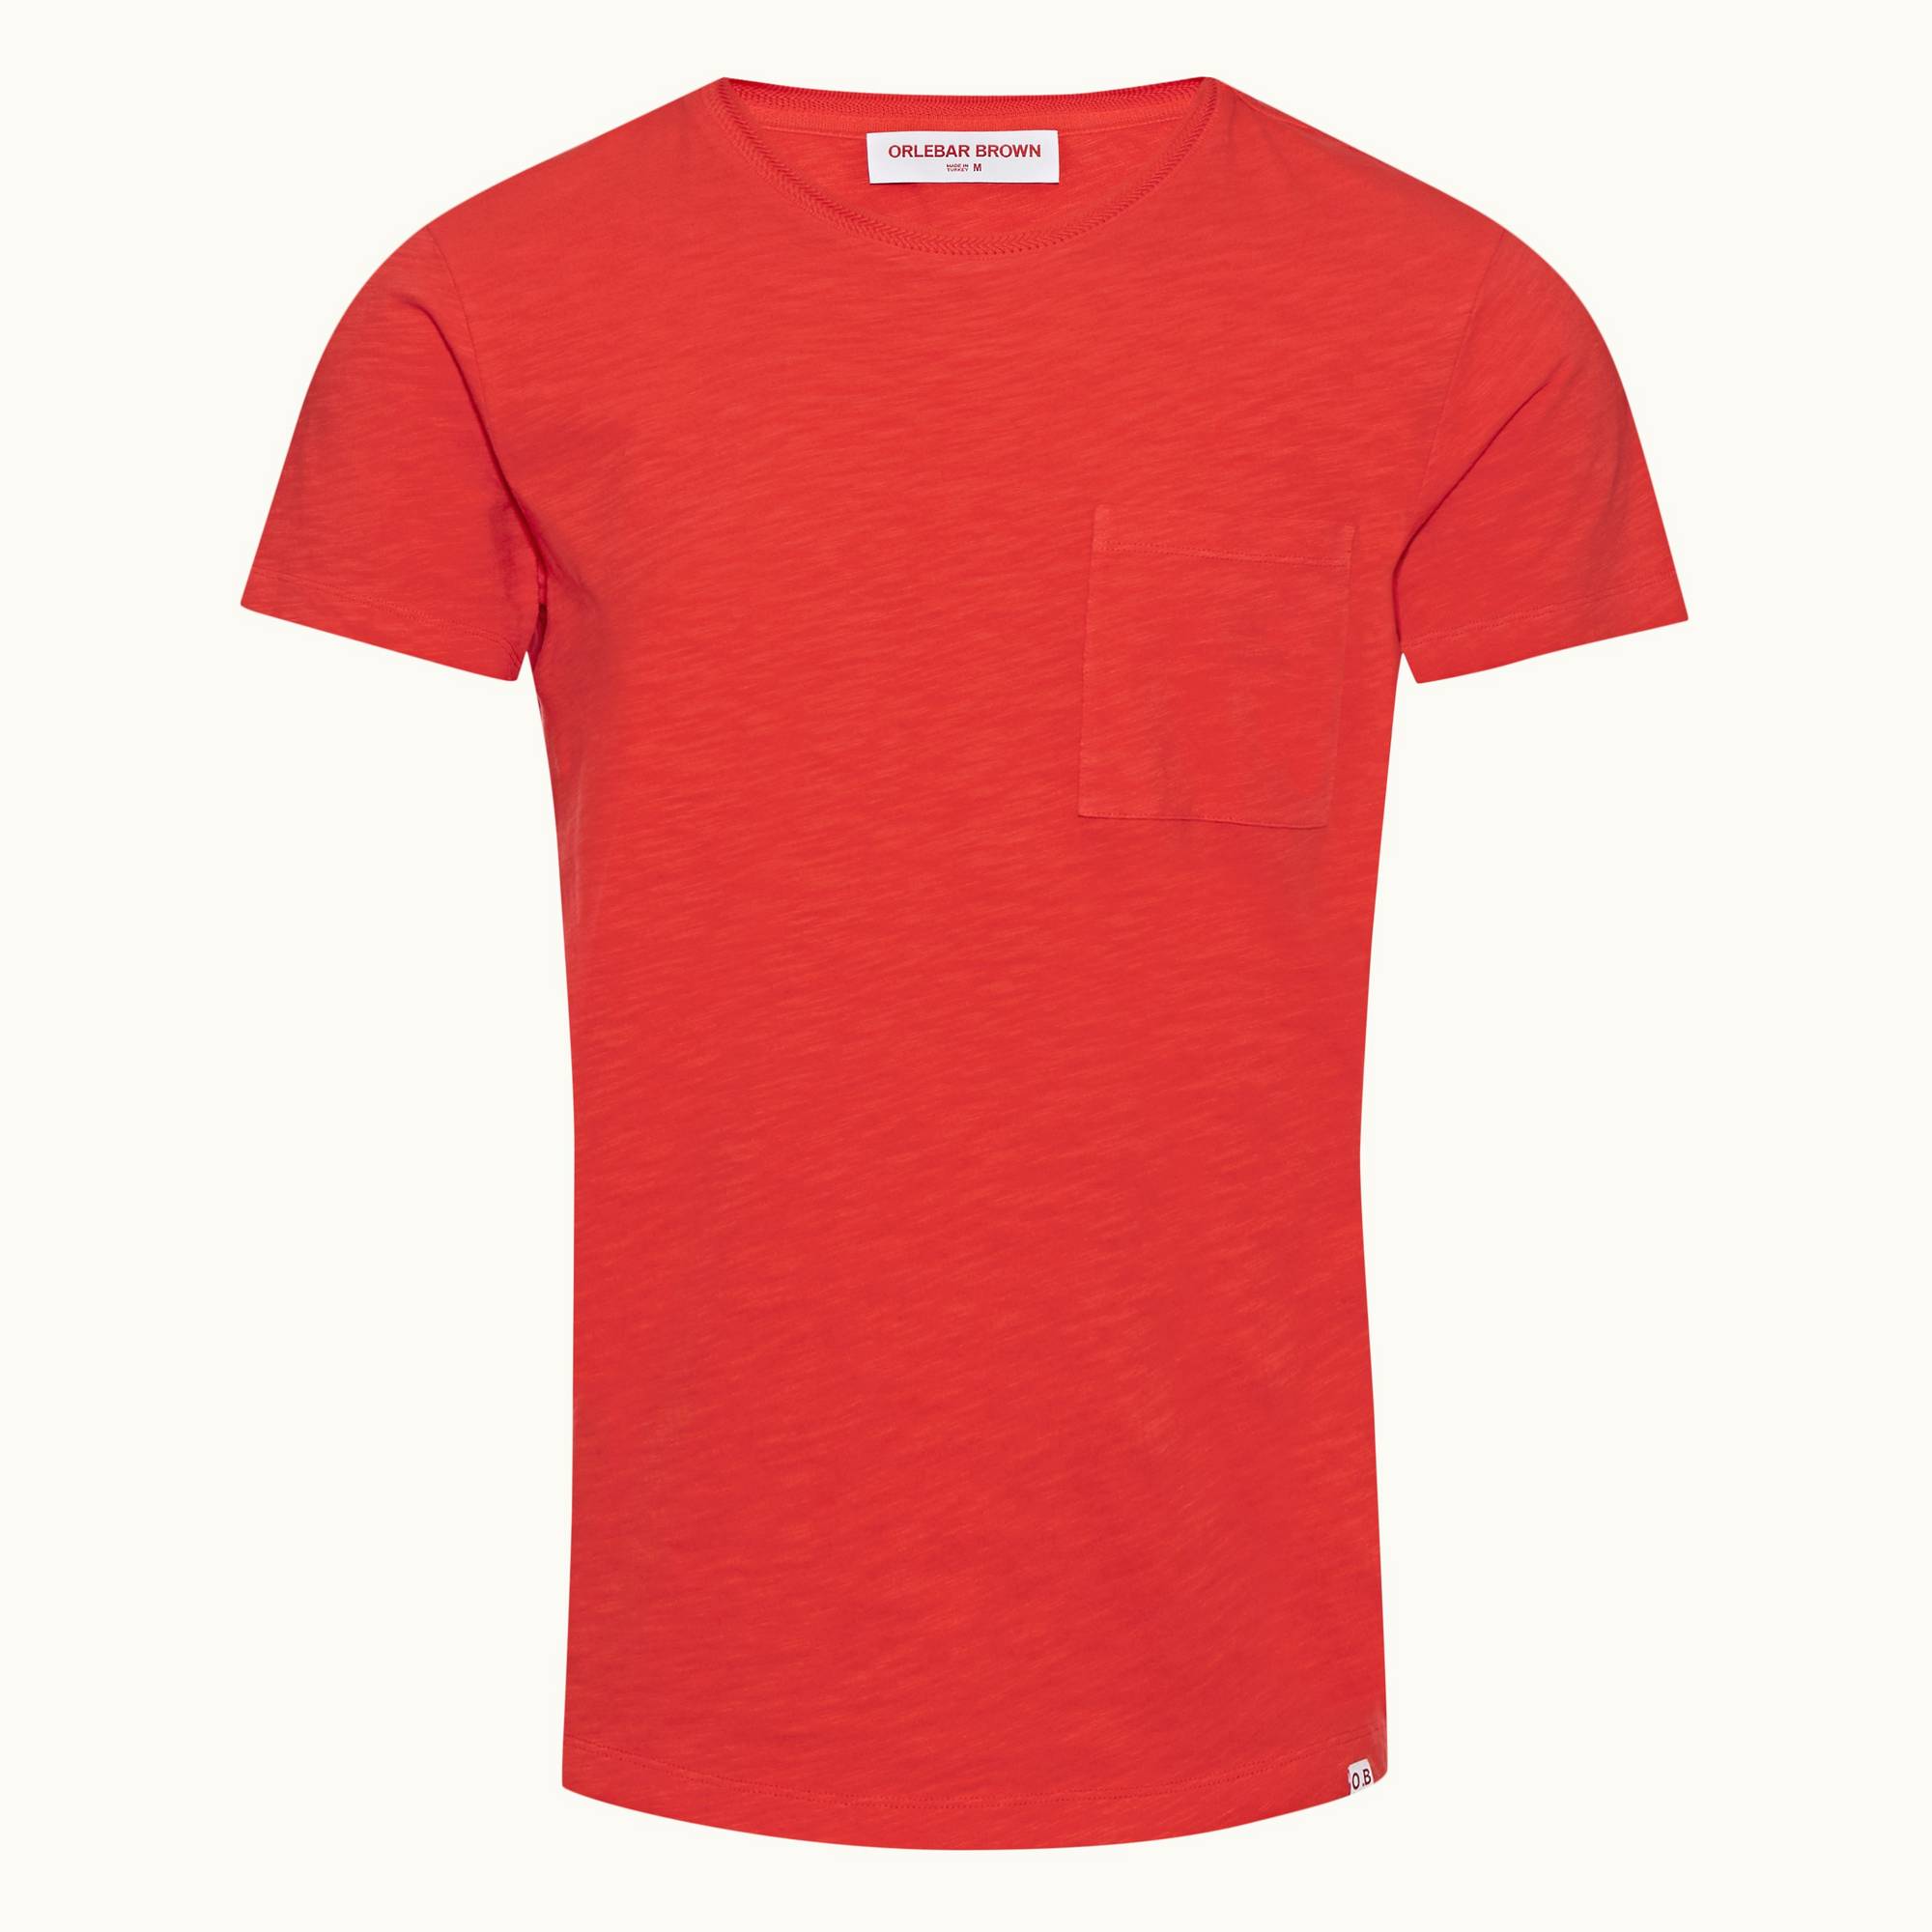 Ob Classic - Mens Summer Red Crew Neck Garment Dye Cotton T-shirt